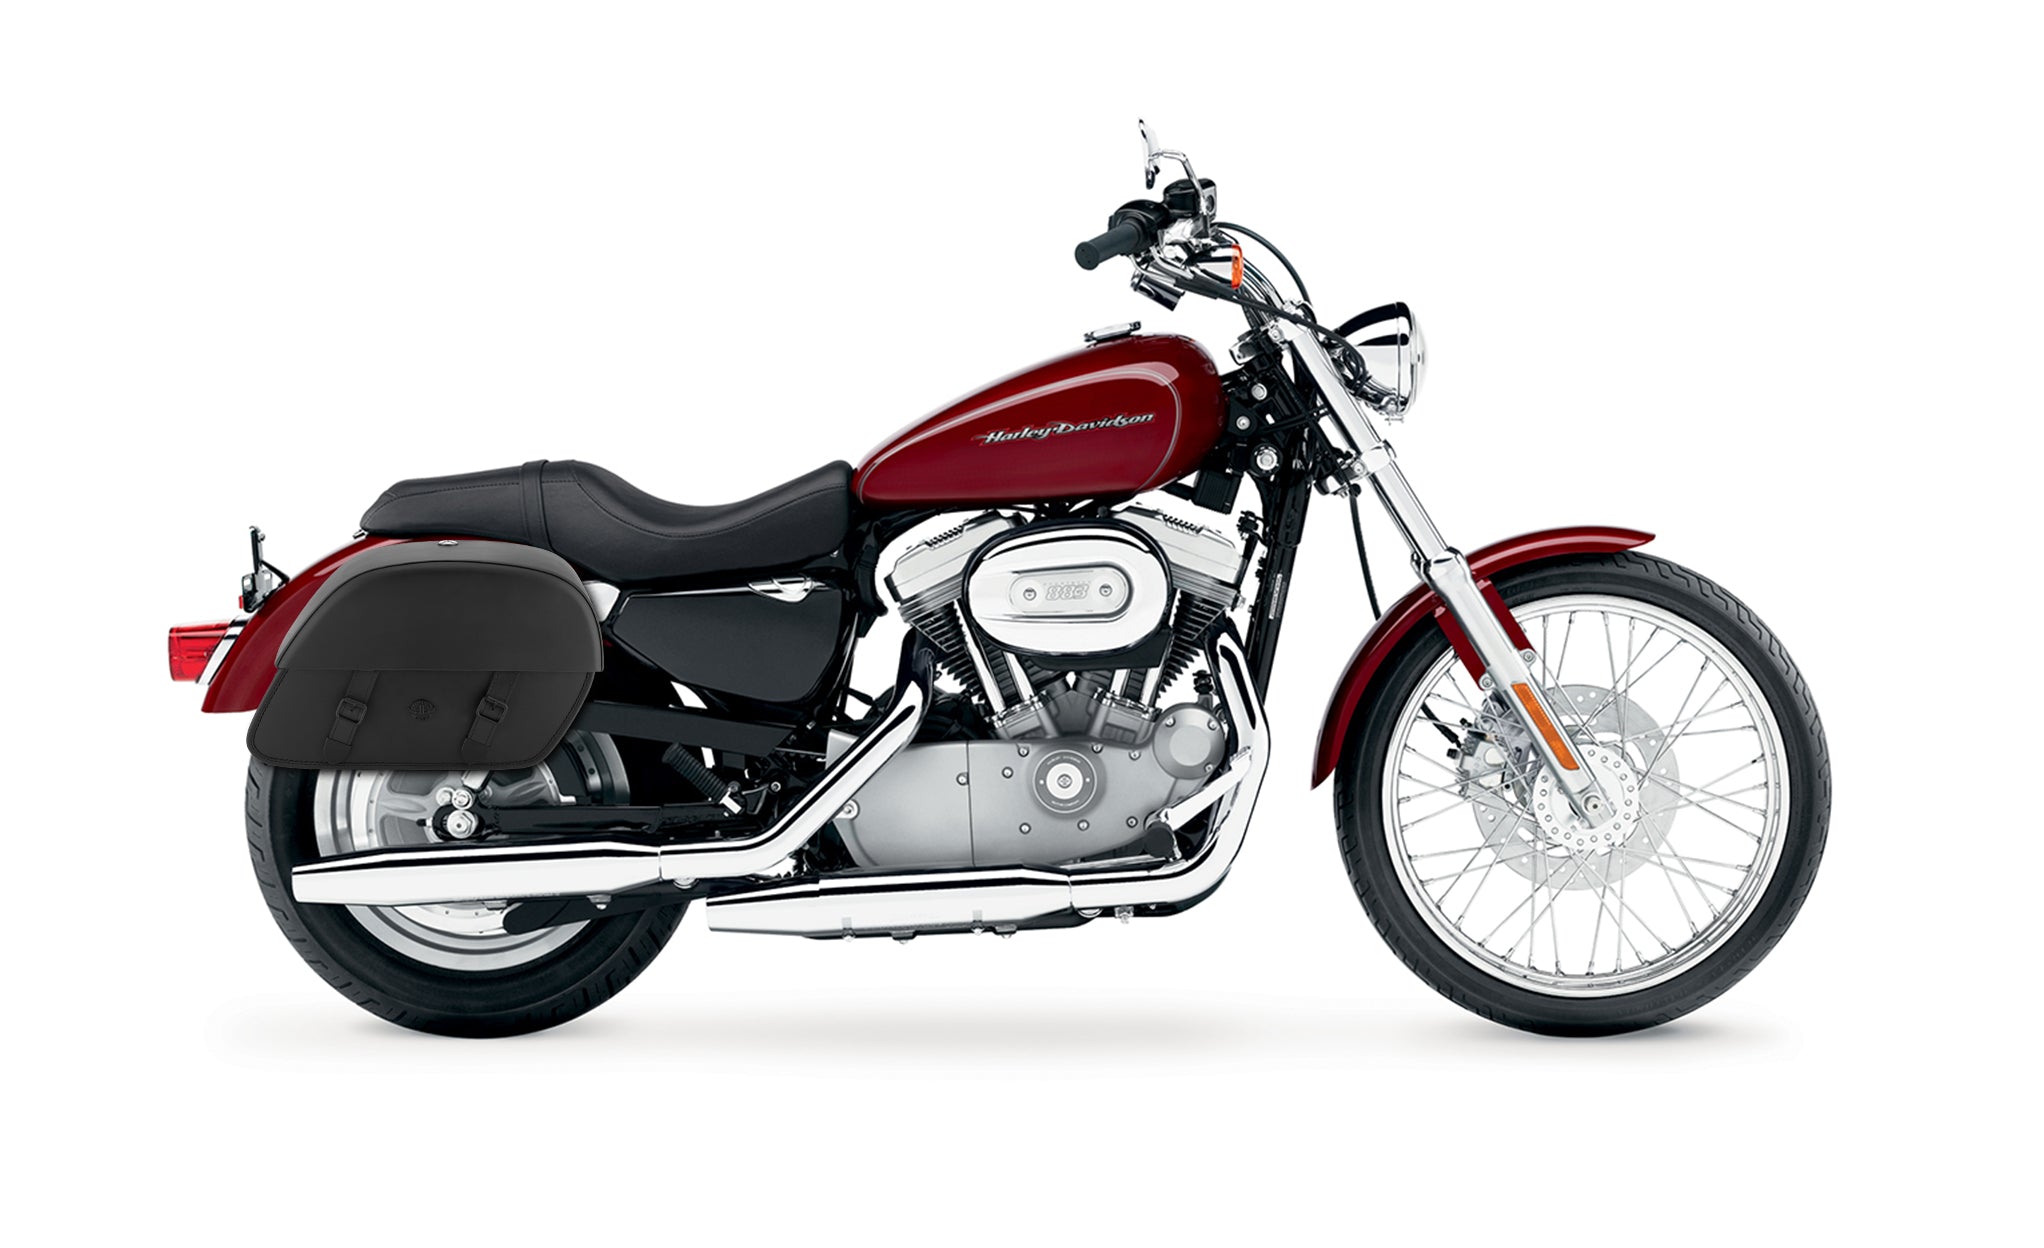 viking-28-liters-baelor-medium-quick-mount-motorcycle-saddlebags-for-harley-sportster-883-custom-xl883c-xlh883c @expand